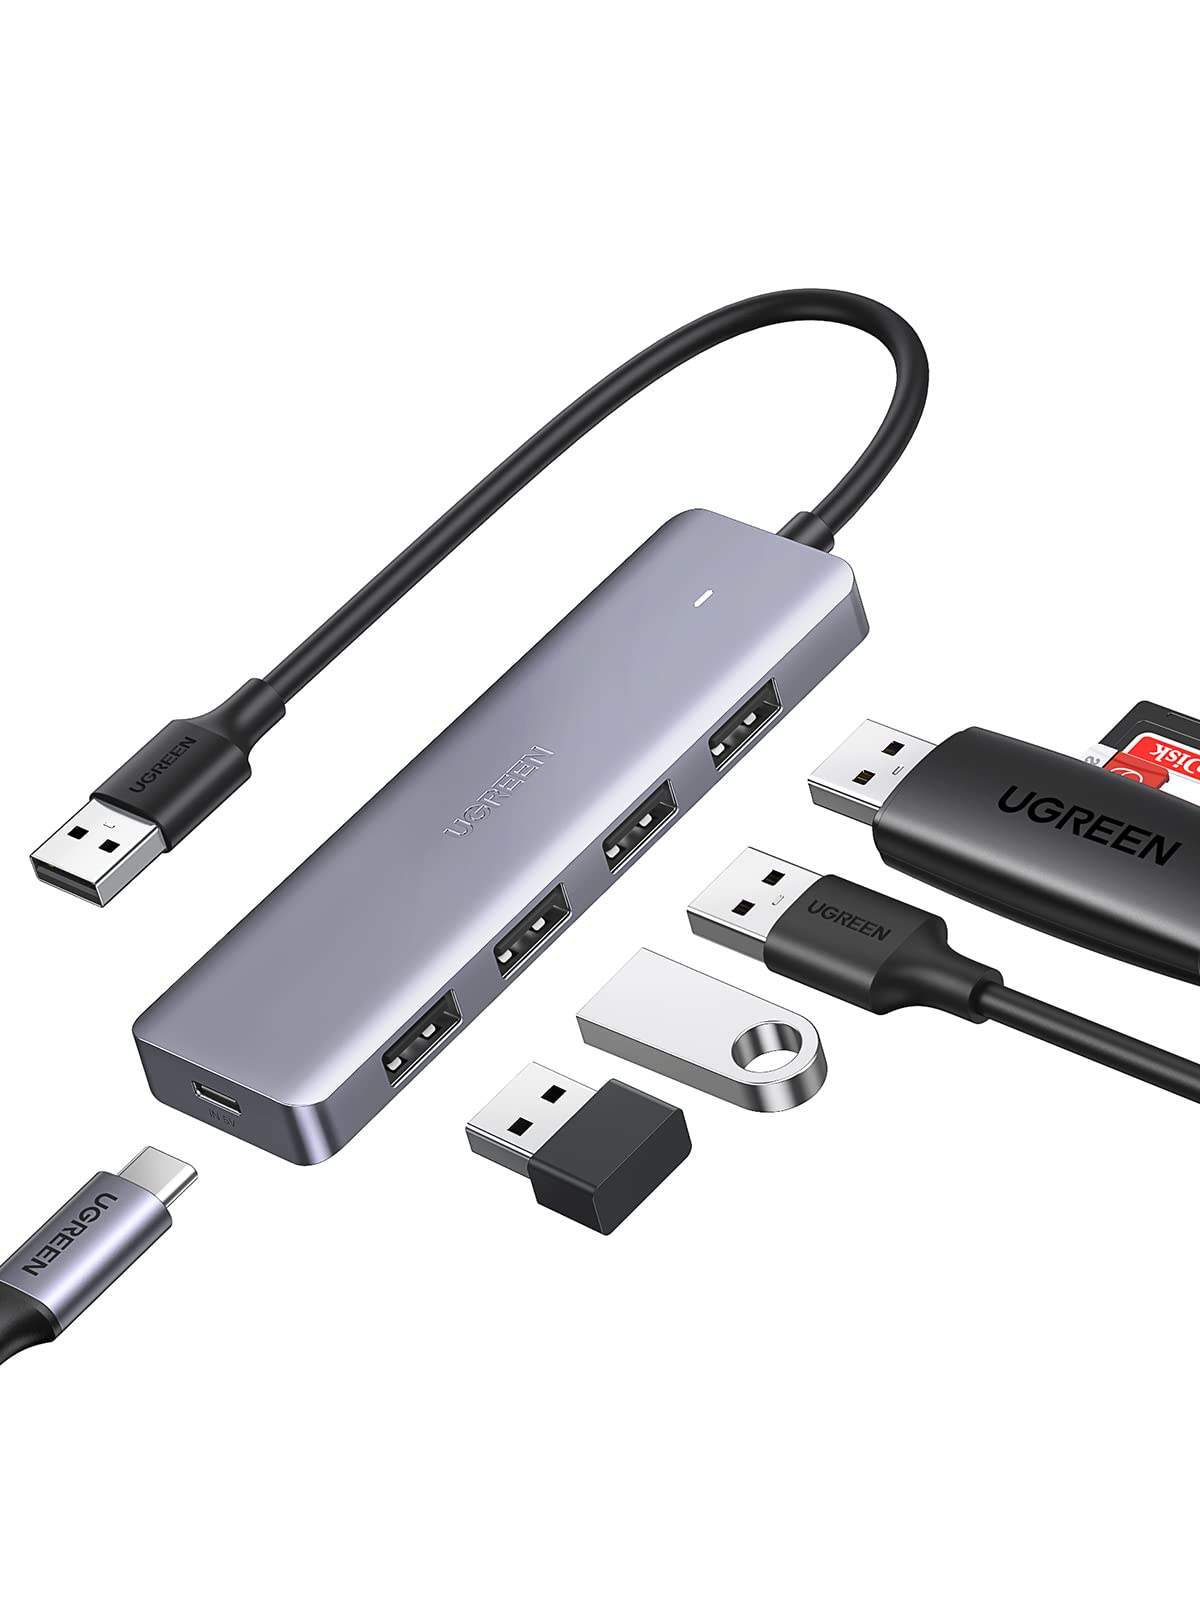 Populaire UGREEN Hub USB 3.0 vers 4 Ports USB pour Clav